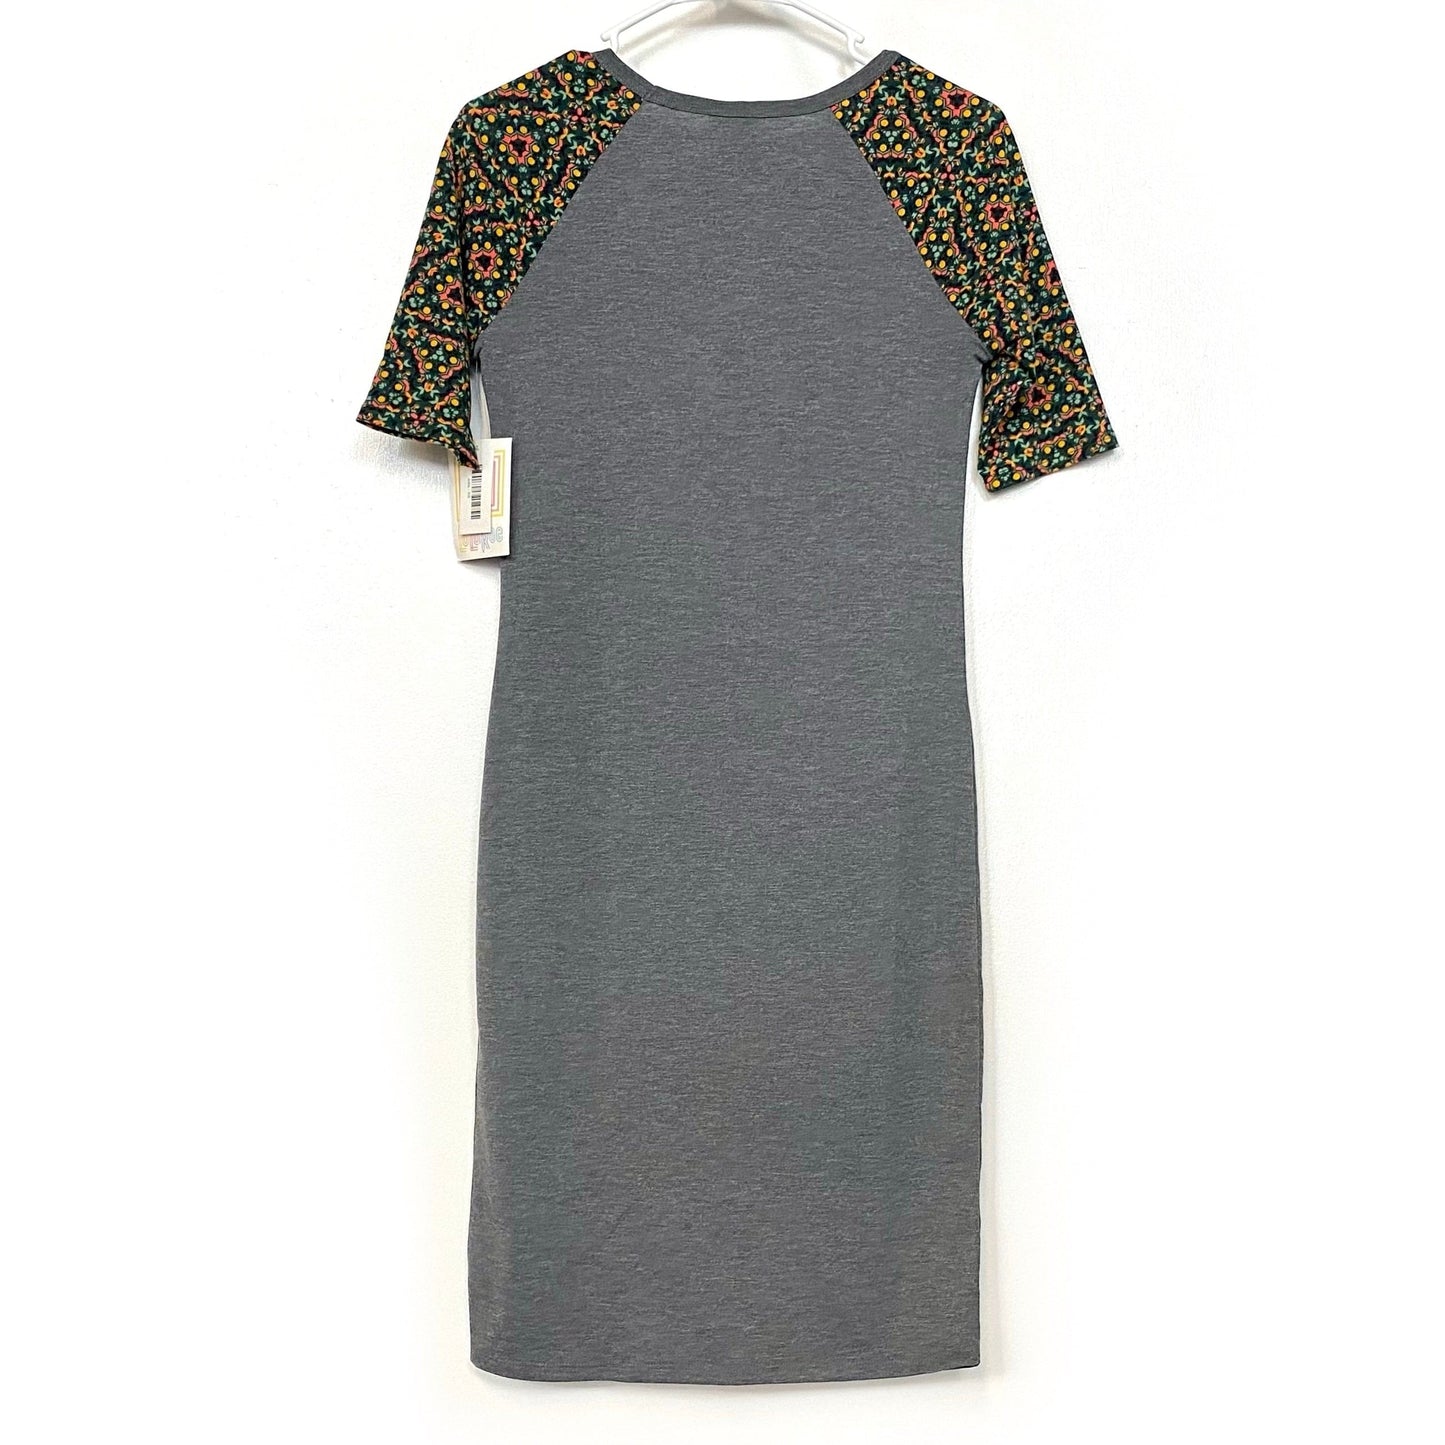 LuLaRoe Womens XS Gray/Green/Orange Floral Julia Shift Dress Scoop Neck ½ Sleeves NWT